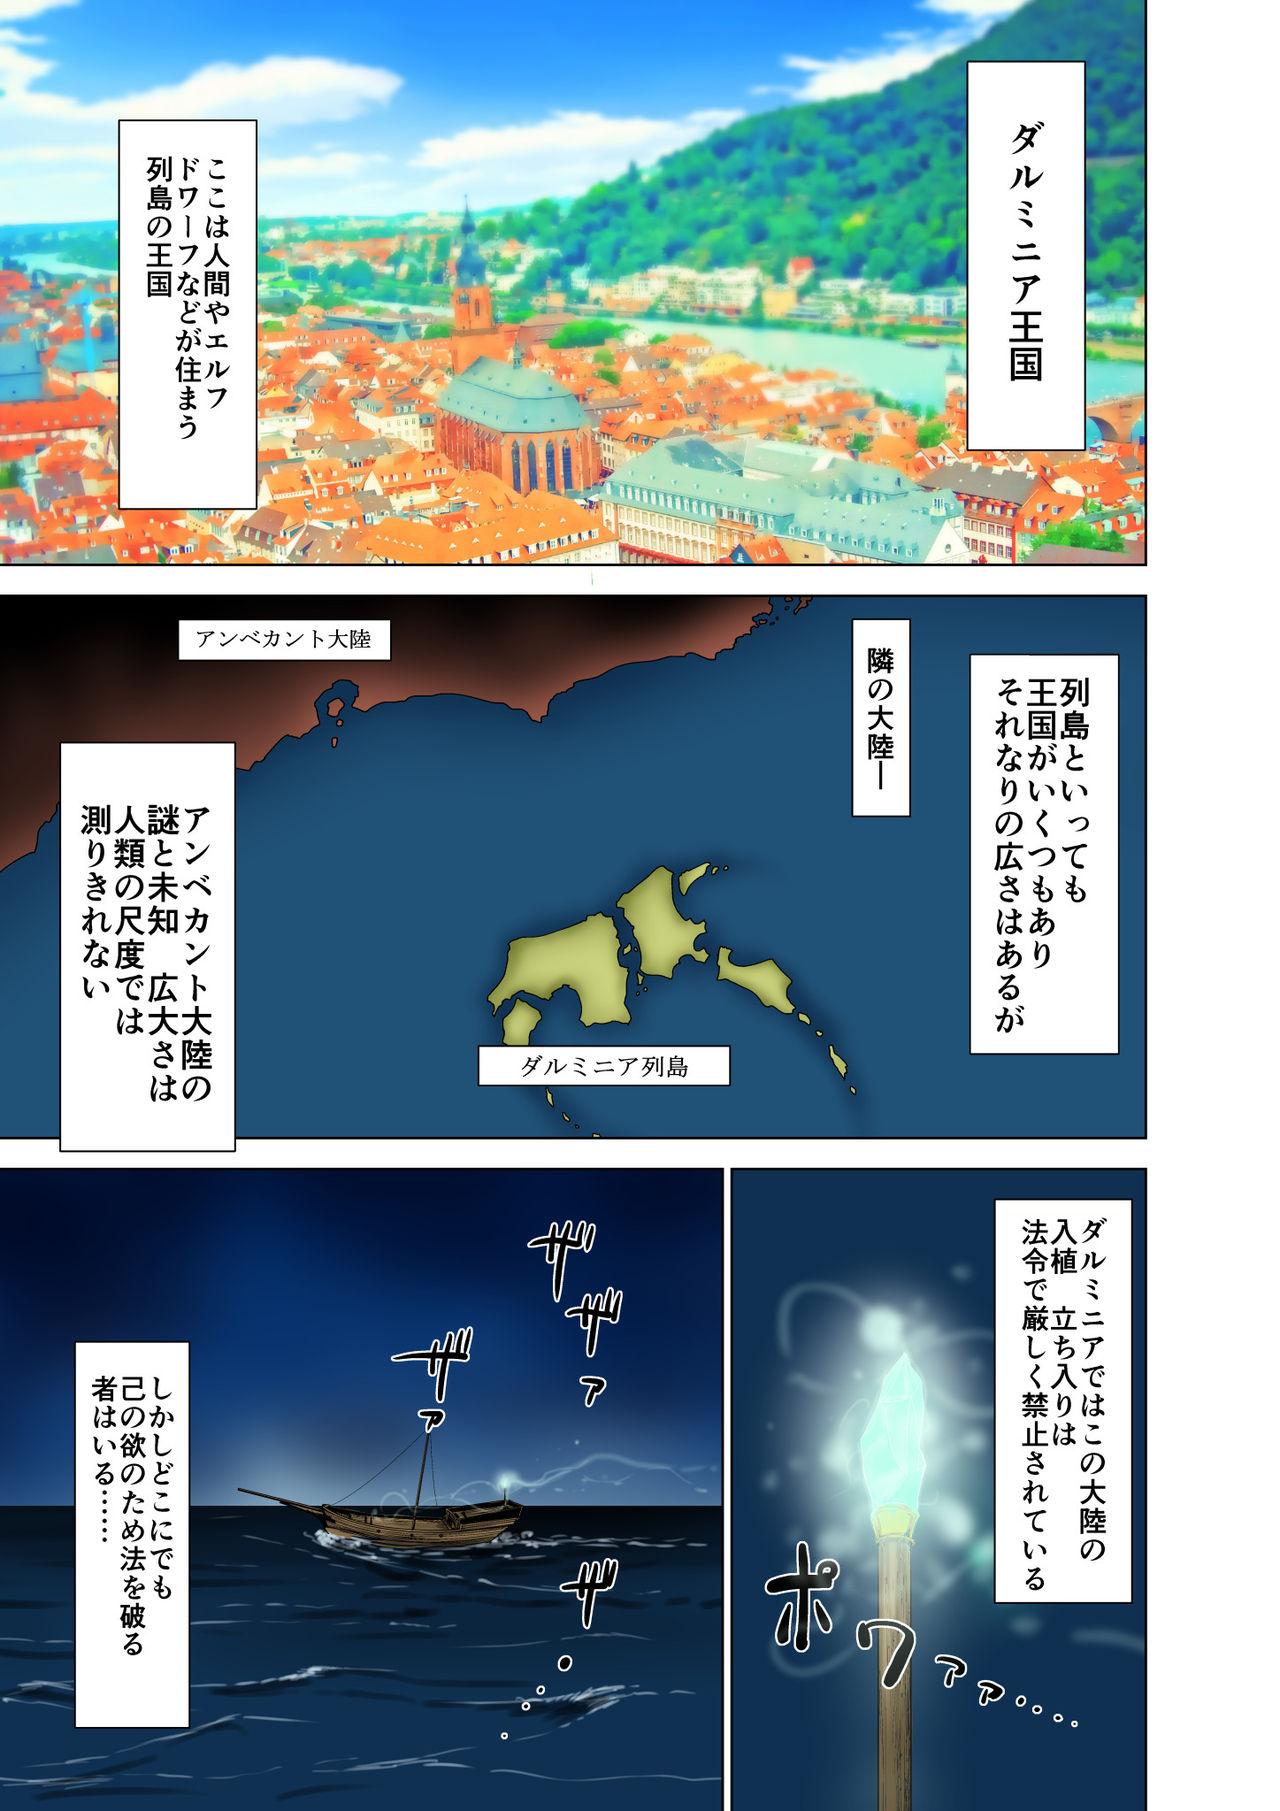 Dluminia Oukoku Monogatari Tsurie - Dluminia kingdom story "Fish bait" Color Ban + 15 Pages 2